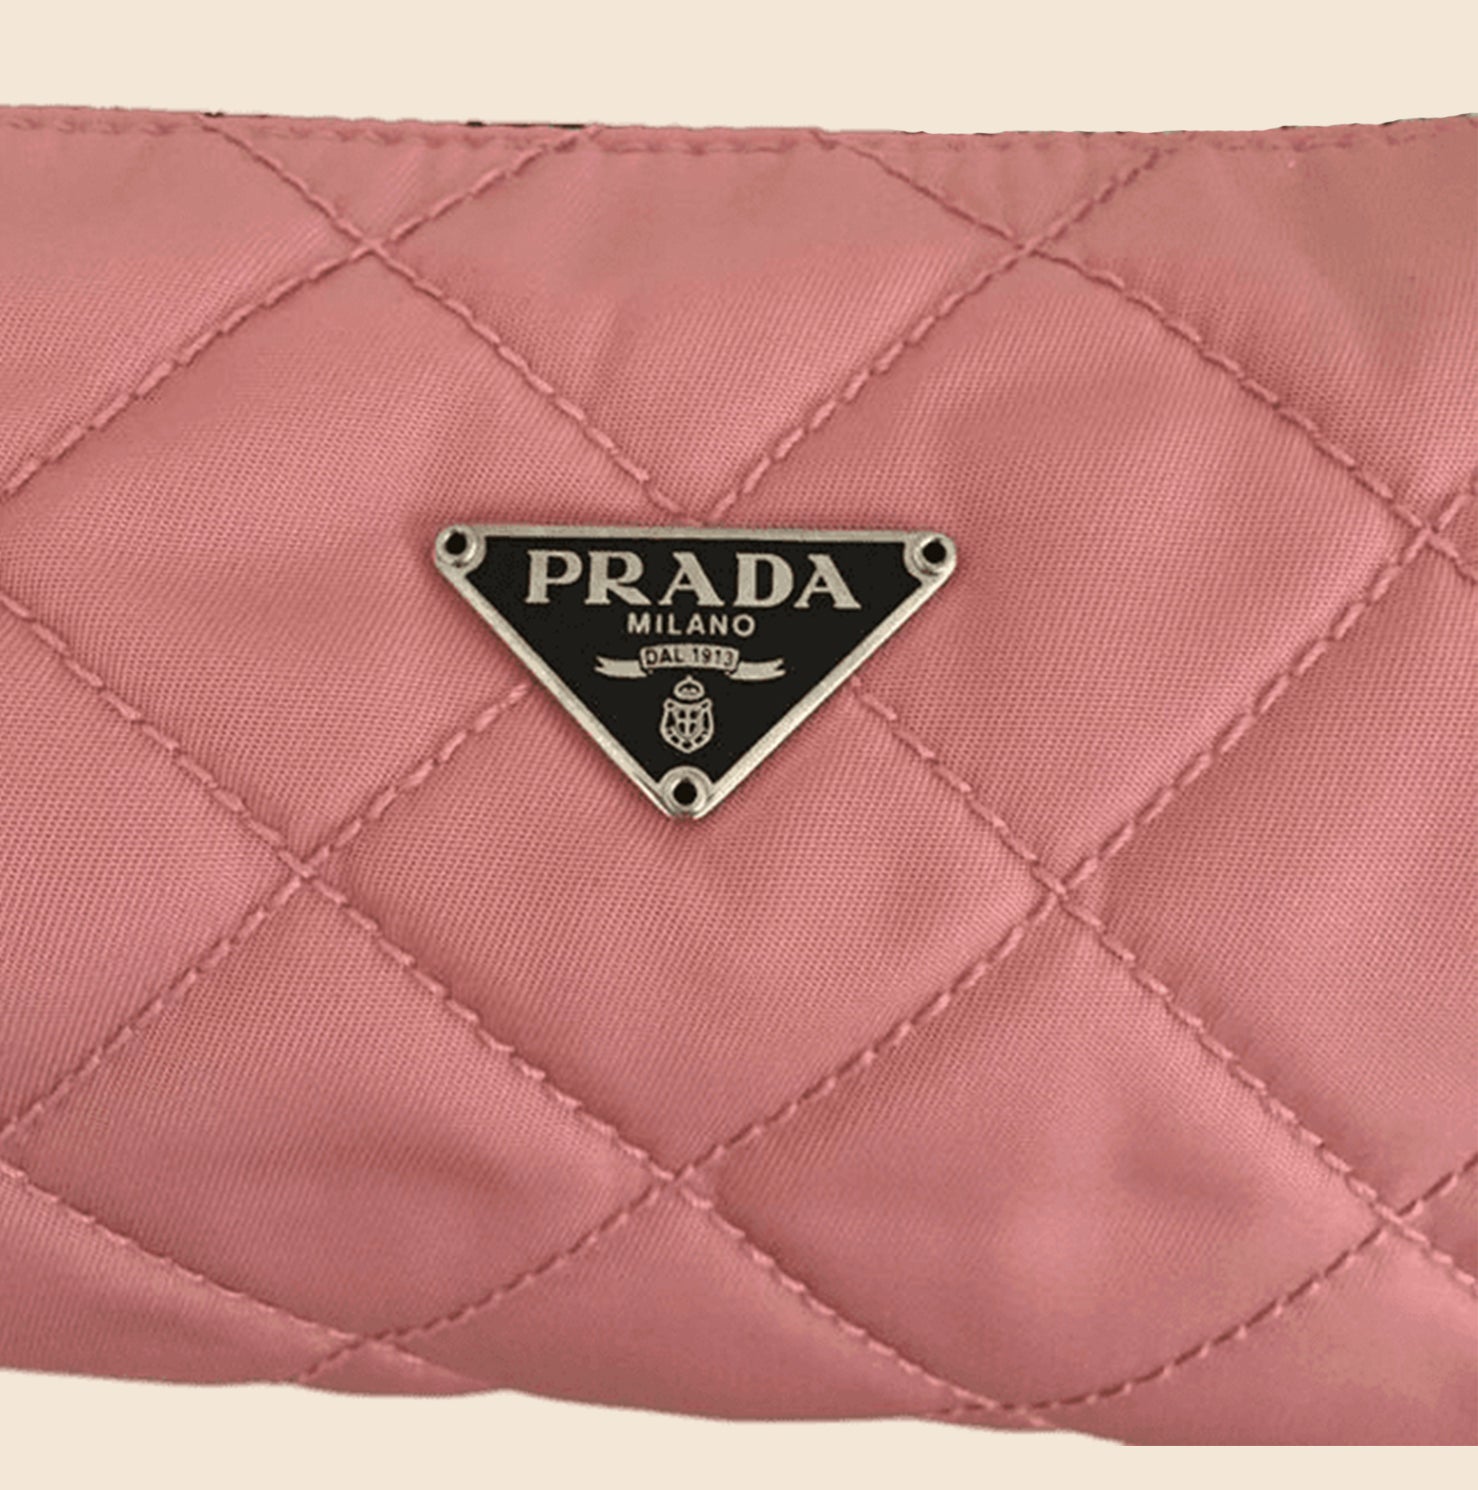 PRADA Milano Dal 1913 Handbag, Luxury, Bags & Wallets on Carousell